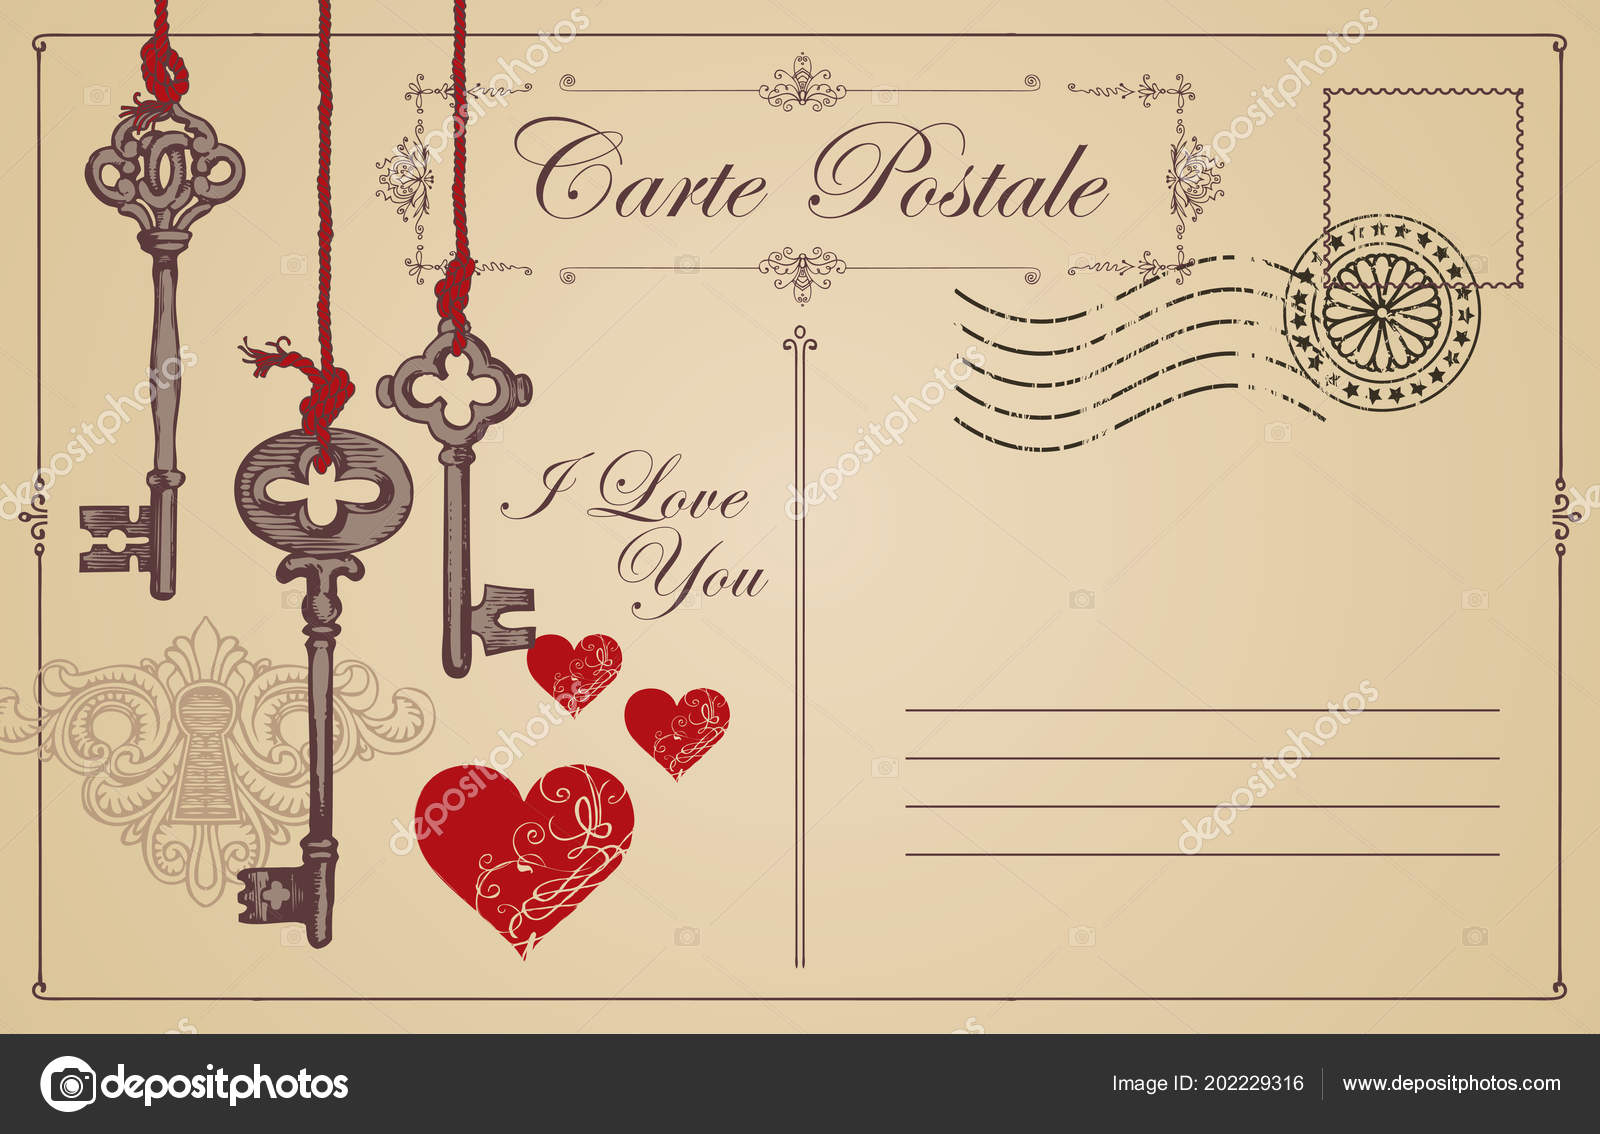 https://st4.depositphotos.com/1536490/20222/v/1600/depositphotos_202229316-stock-illustration-retro-postcard-theme-declaration-love.jpg